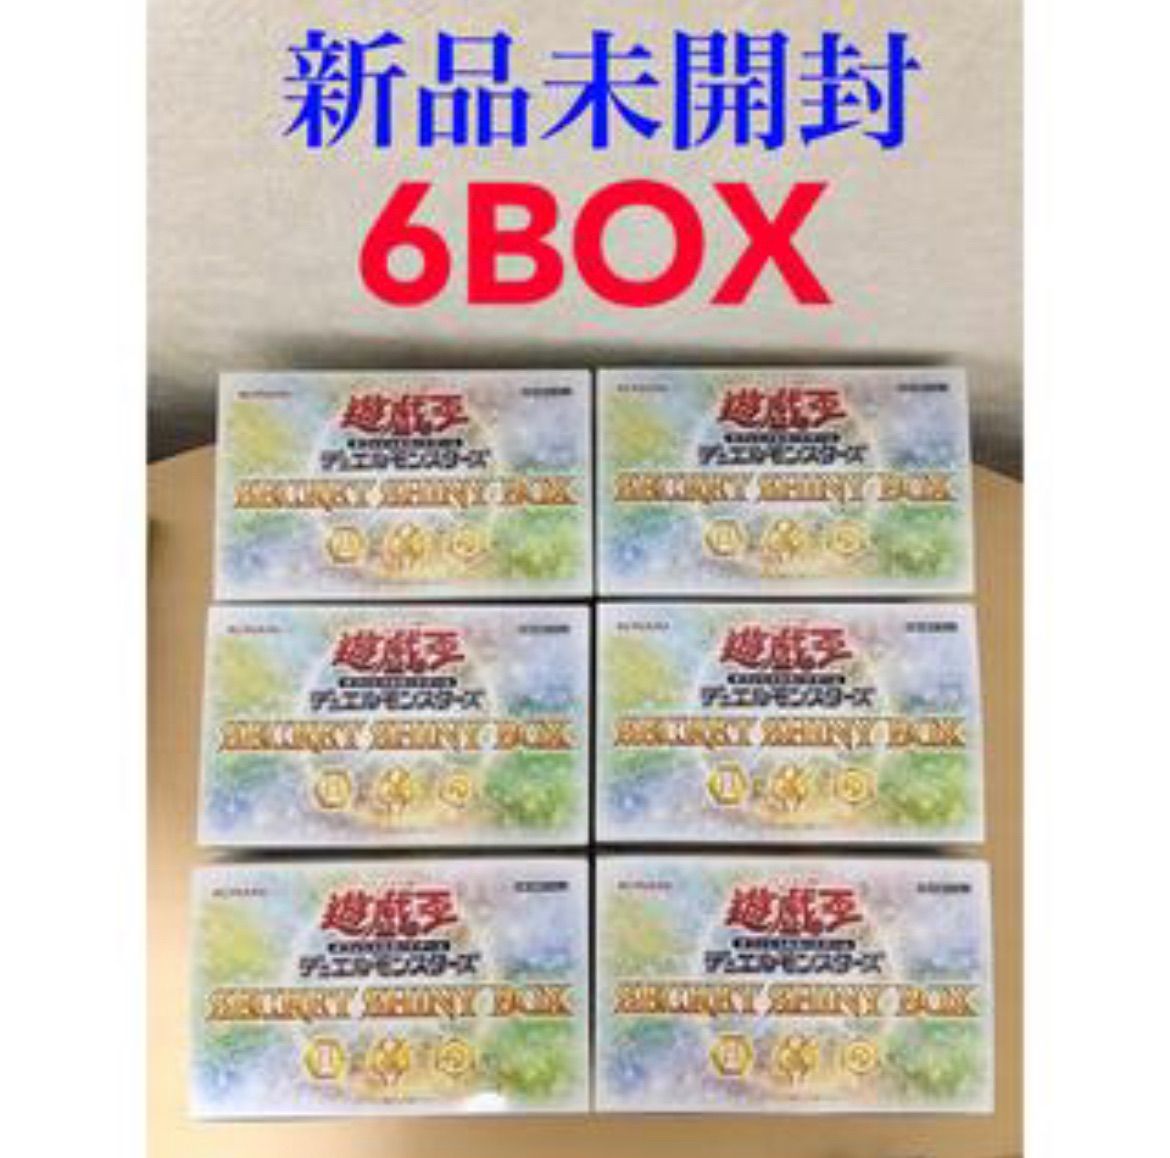 6box 遊戯王 SECRET SHINY BOX シークレットシャイニー